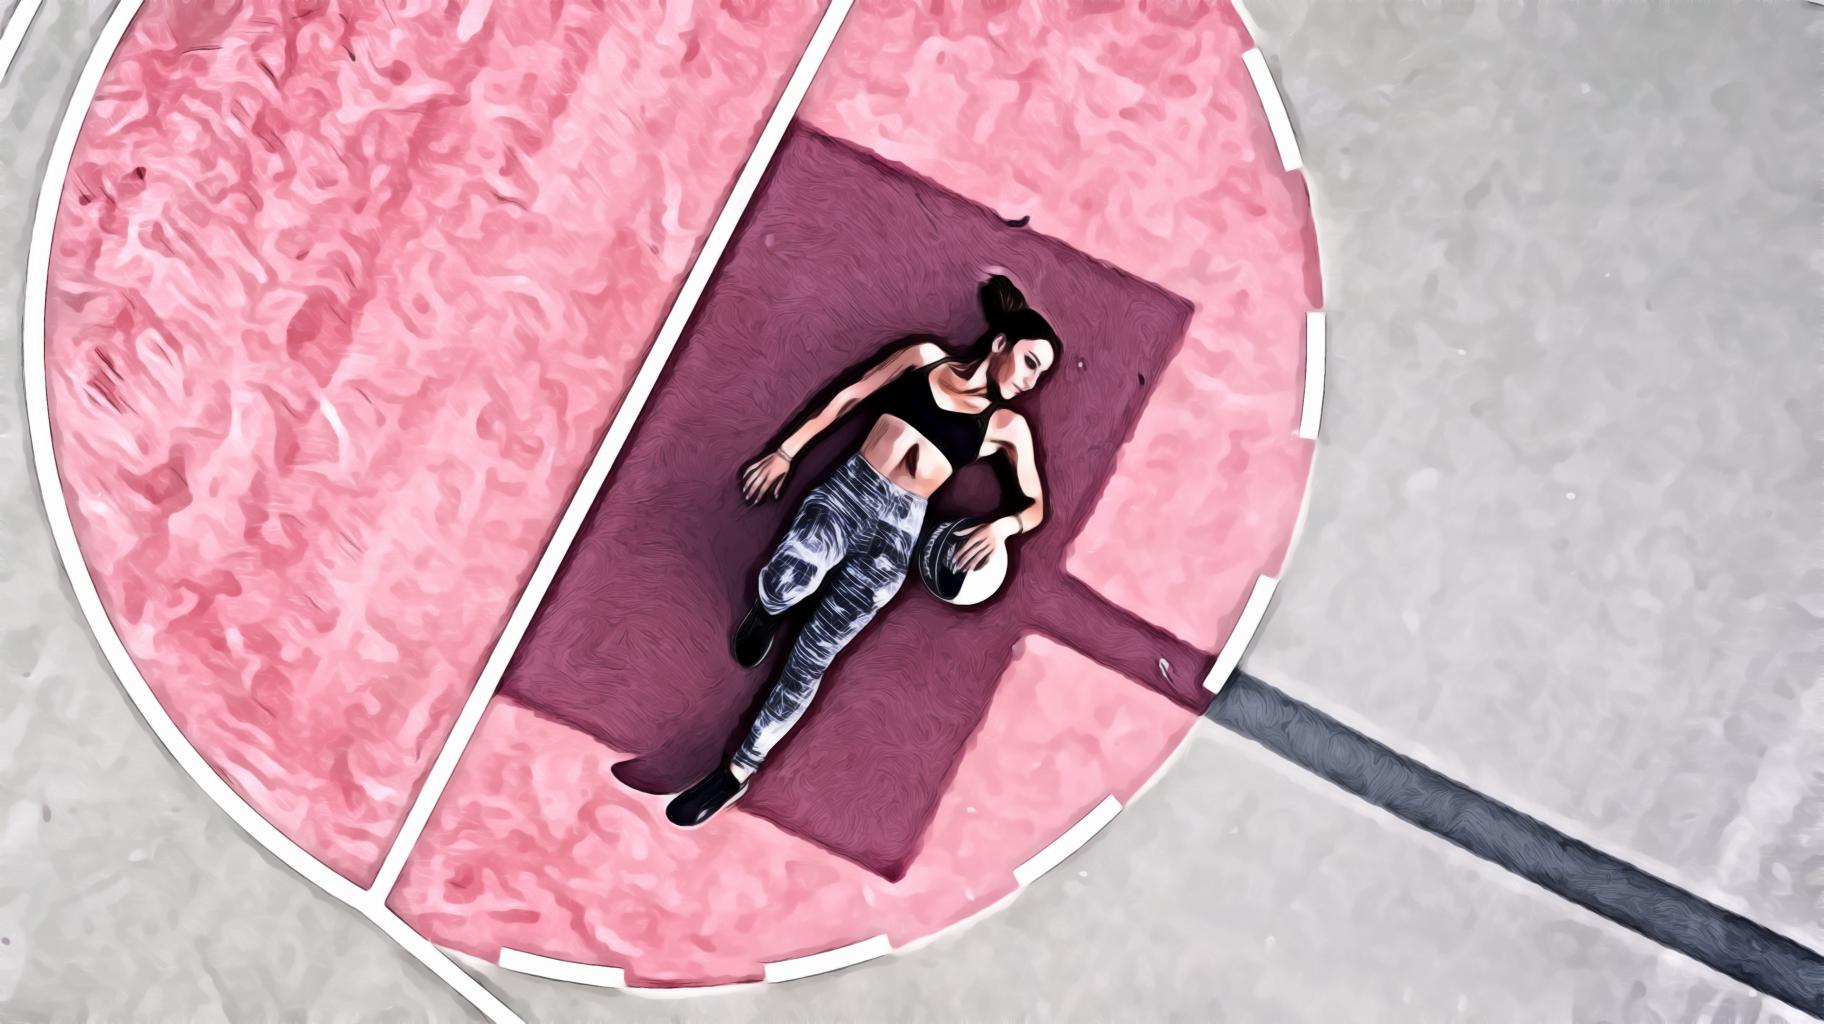 Woman Lying on Basketball Court